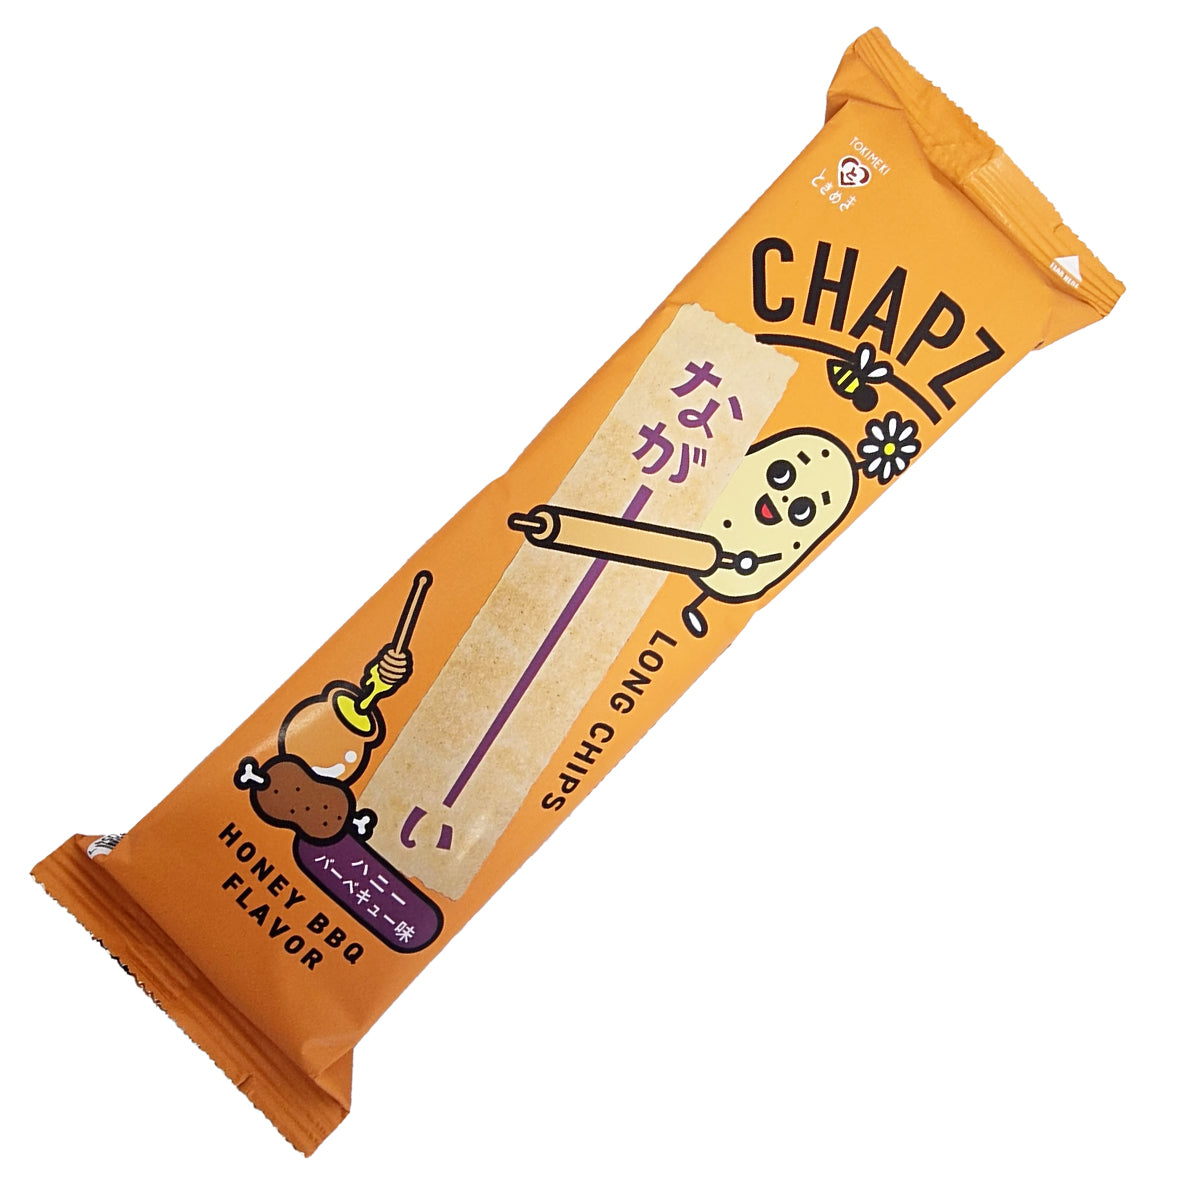 Chapz Long chips - Honey BBQ Flavor